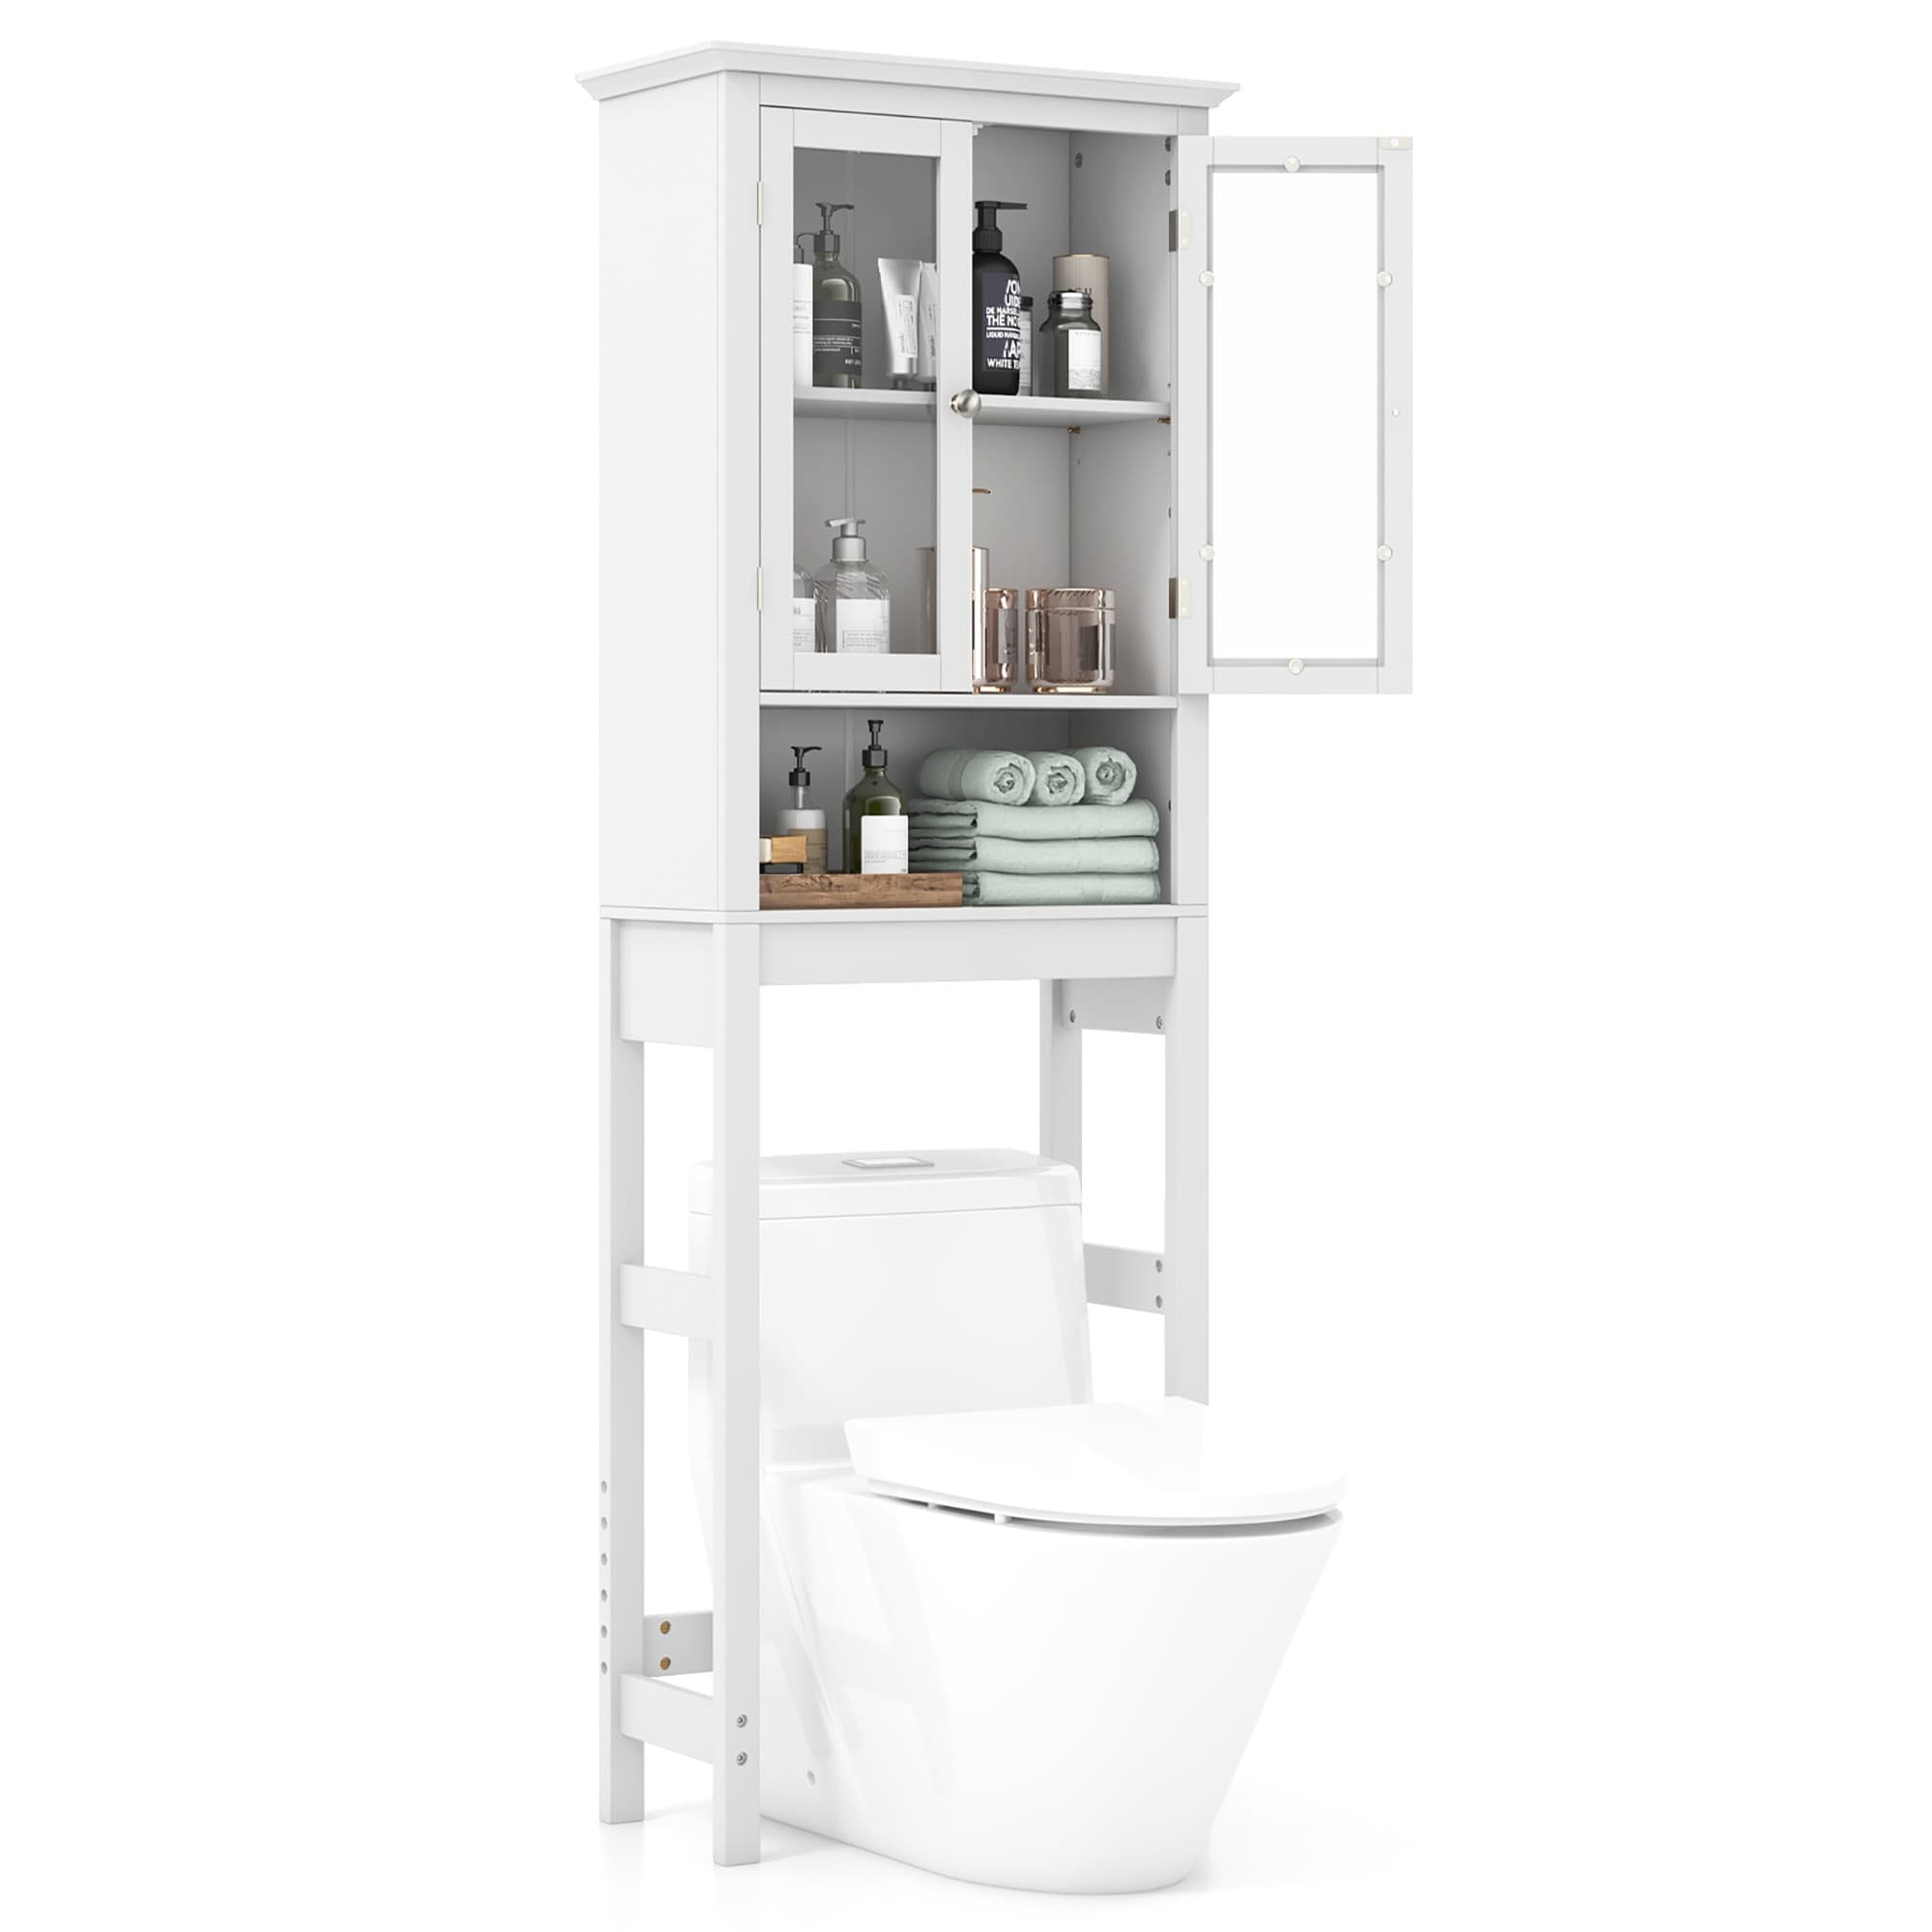 https://ak1.ostkcdn.com/images/products/is/images/direct/5bf37ec1c31809e57f081cc0b8280ace971b2c8c/Costway-Over-The-Toilet-Storage-Cabinet-2-Doors-Bathroom-Organizer.jpg